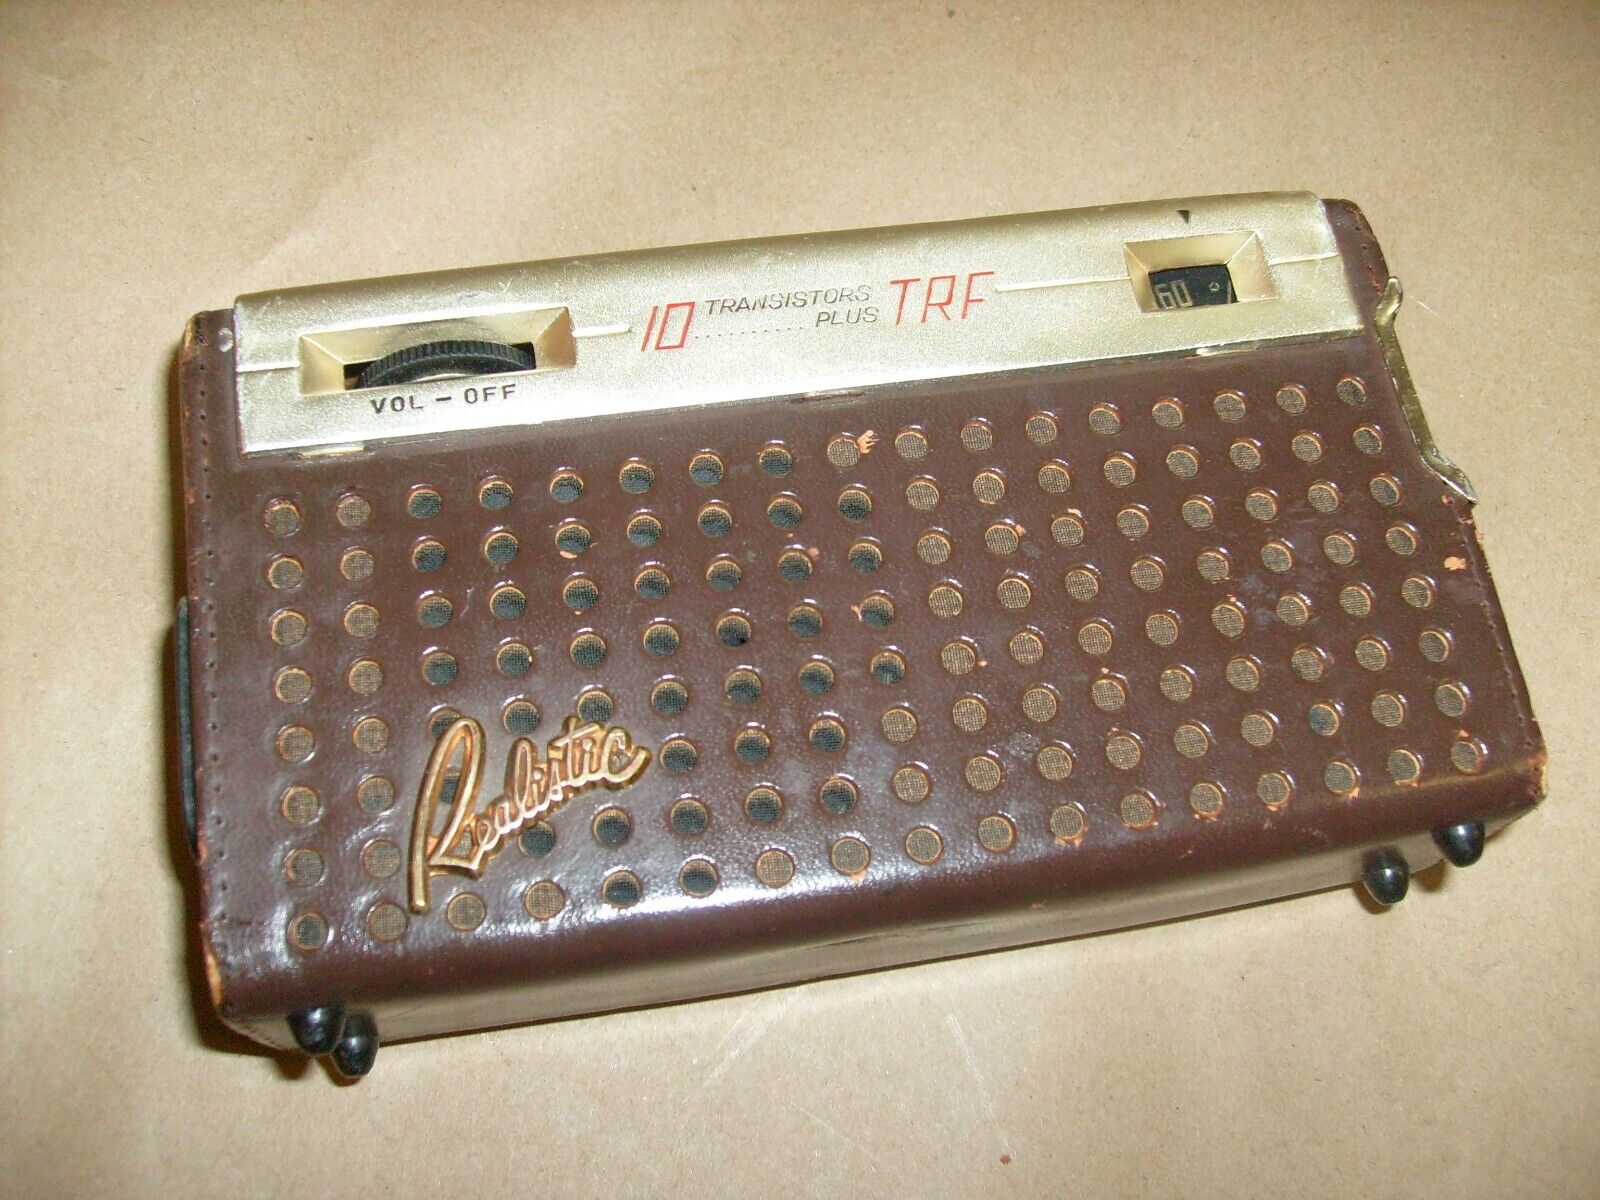 Retro Realistic 10 Plus TRF Transistor Radio brown Genuine Leather - untested 